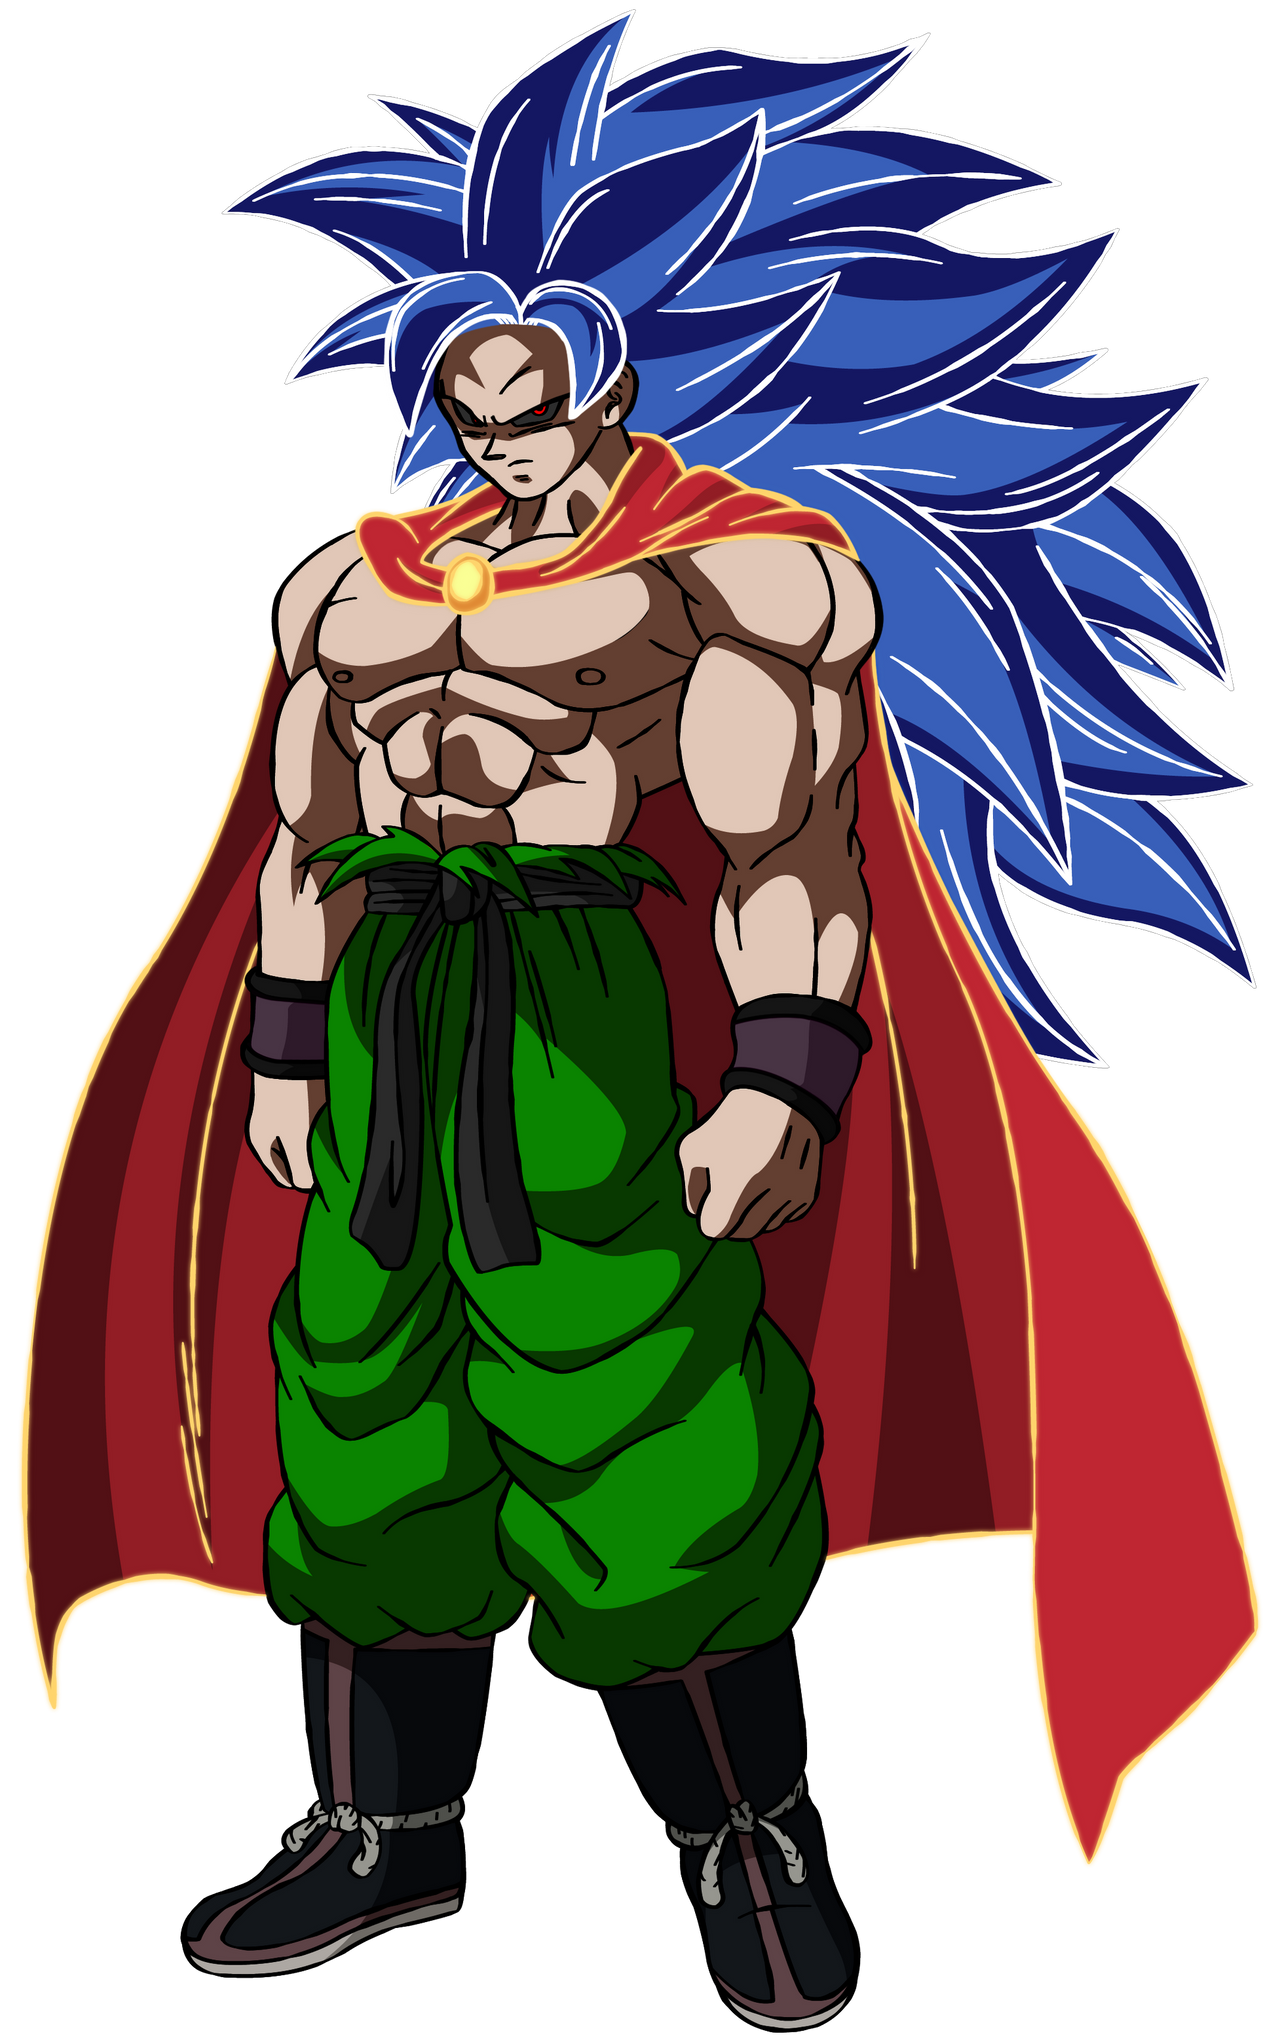 Goku AF - Super Saiyajin 7 Dios (Forma Original) by SebaToledo on DeviantArt